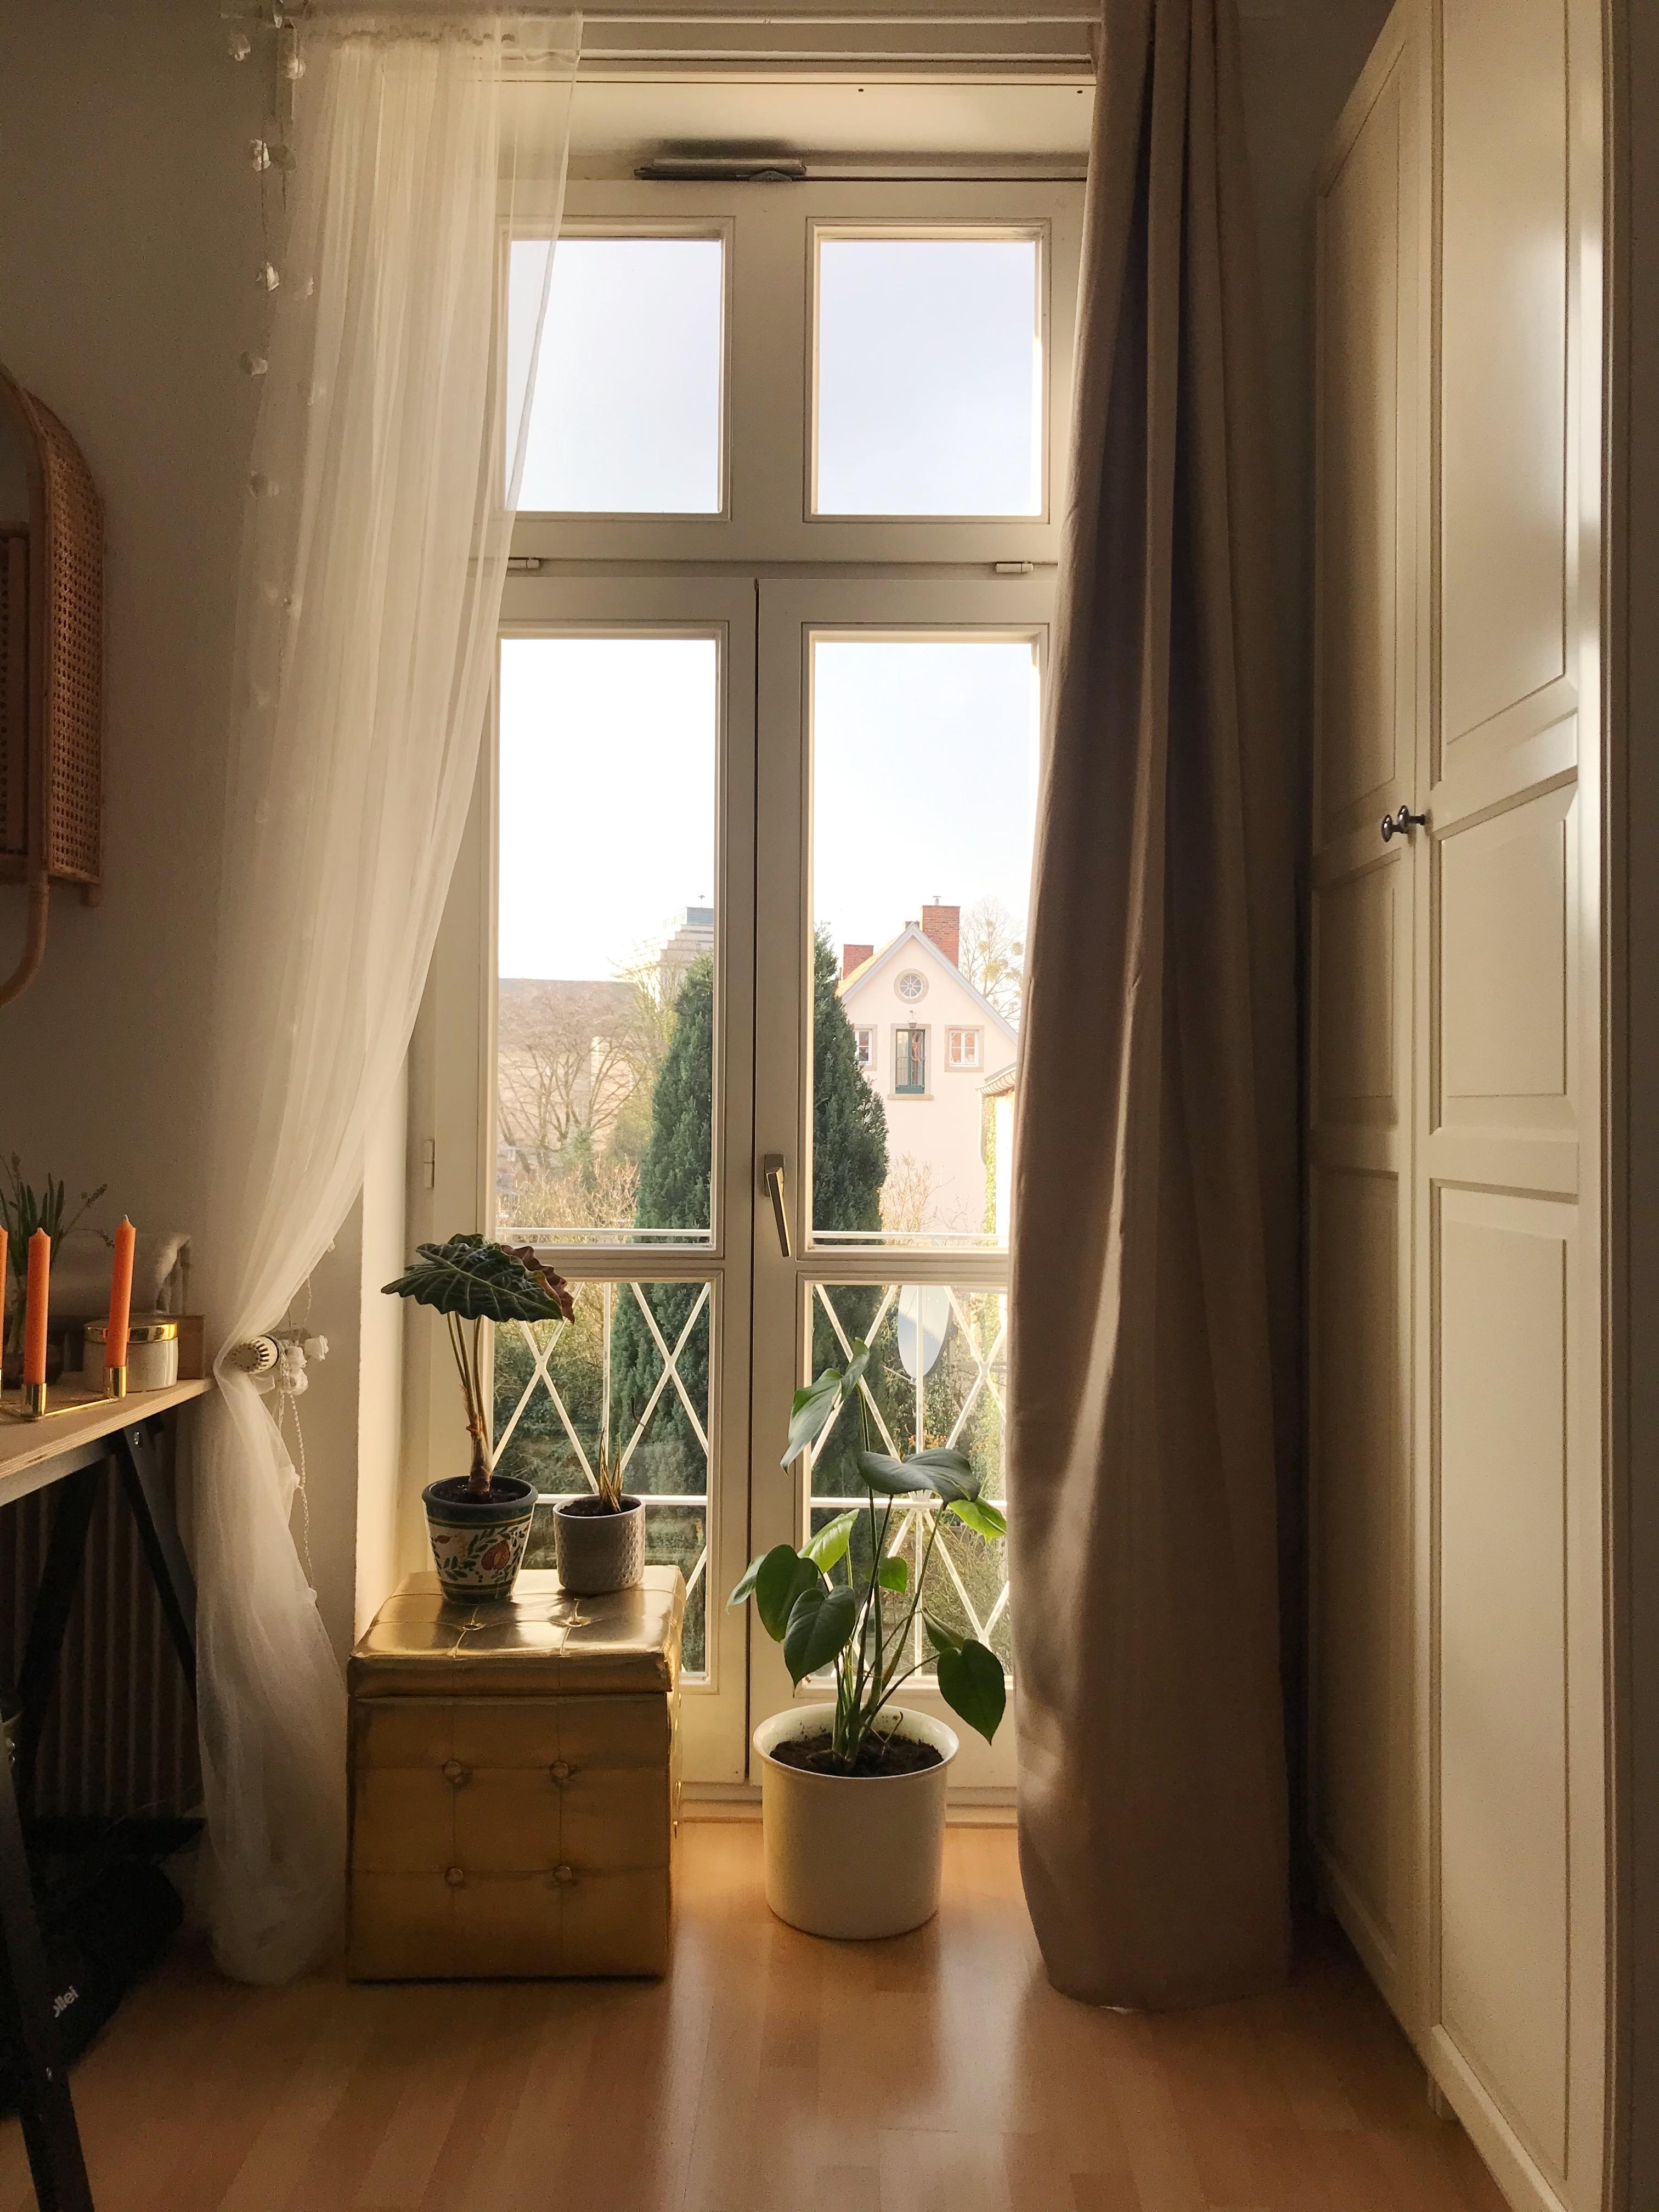 stay home 🧡
#home#coronope#couchmagazin#couchliebt#sunshine#garden#gold#interiordesign#interior#architecture#golden